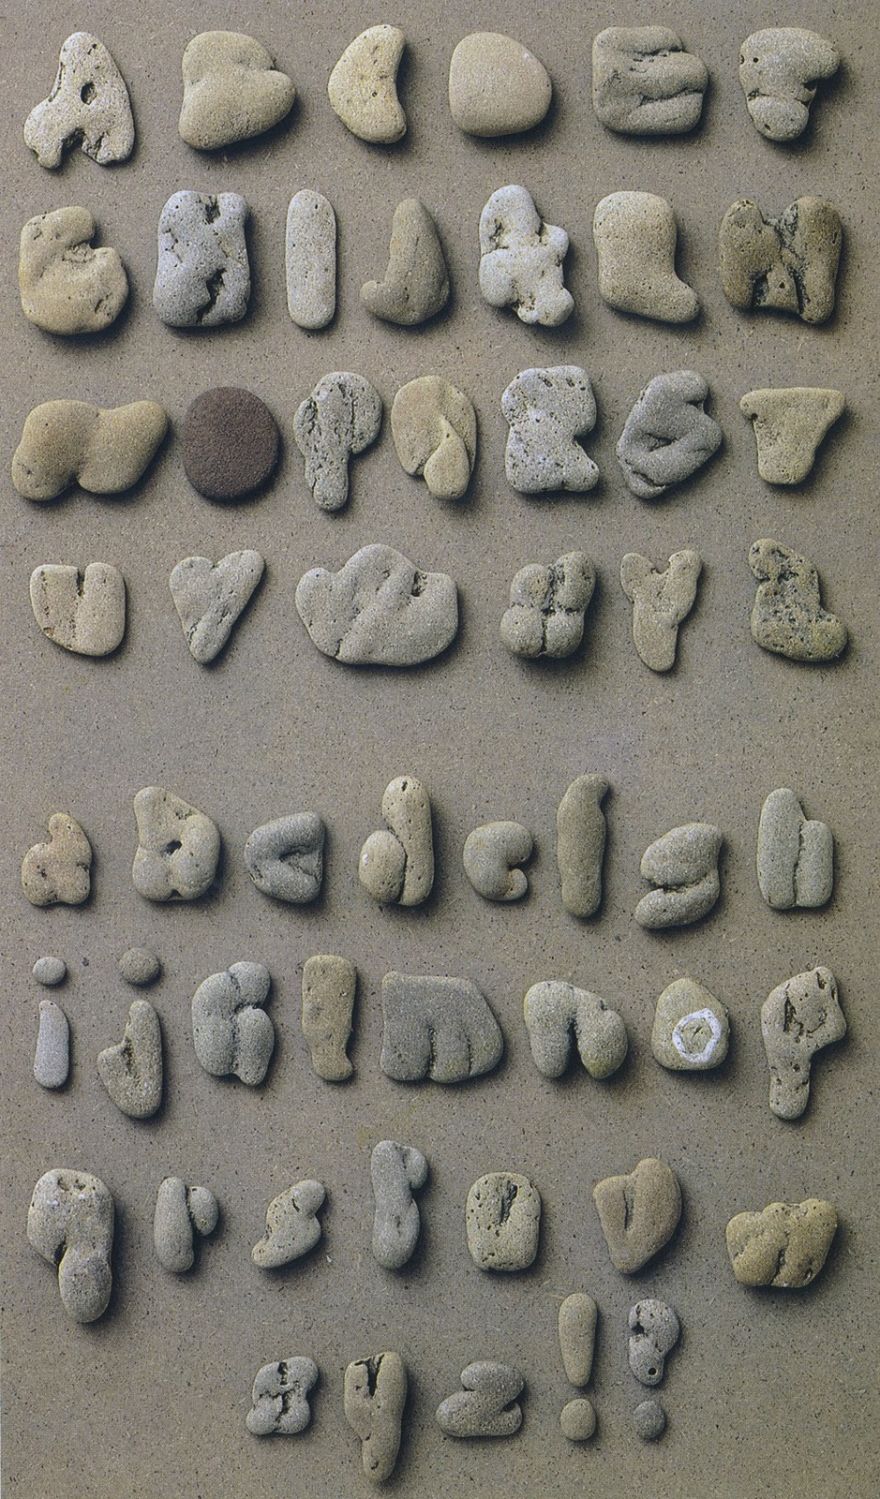 Stone+alphabet+collection.+Gotta+catch+them+all.